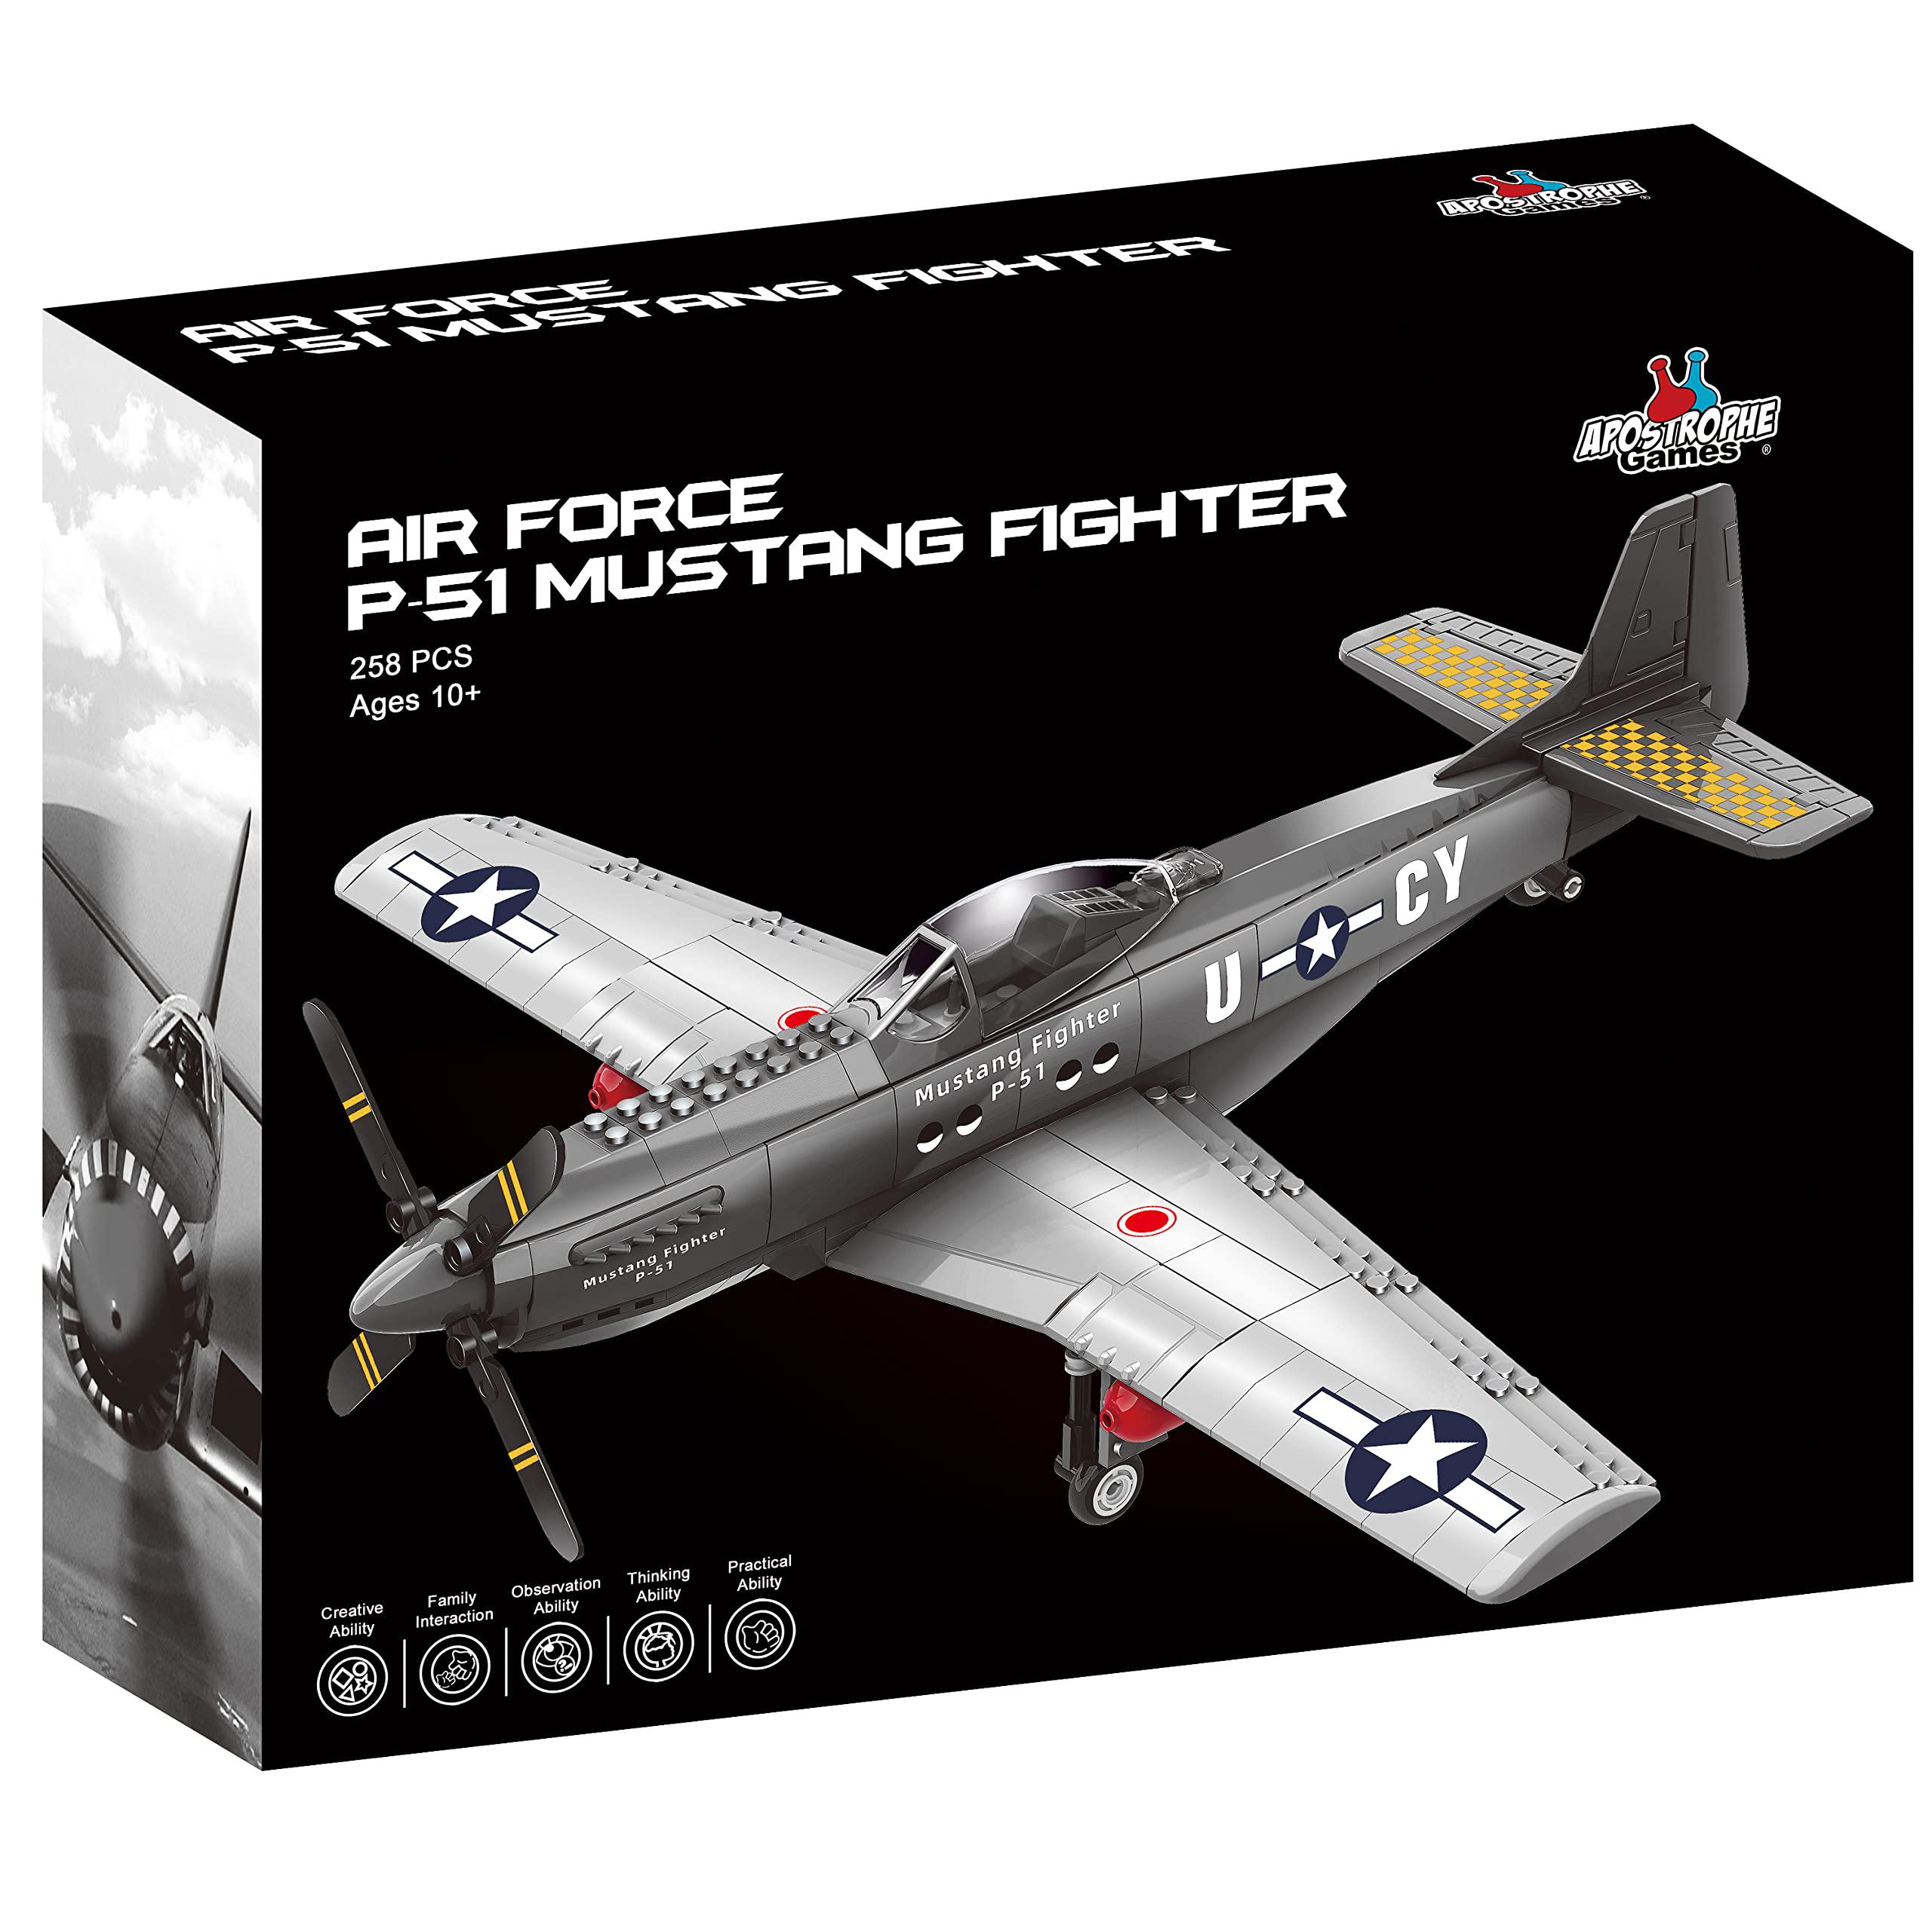 apostrophe games ww2 p-51 mustang fighter plane building block set - 258 -pcs building toys set - plane toy for kids older th